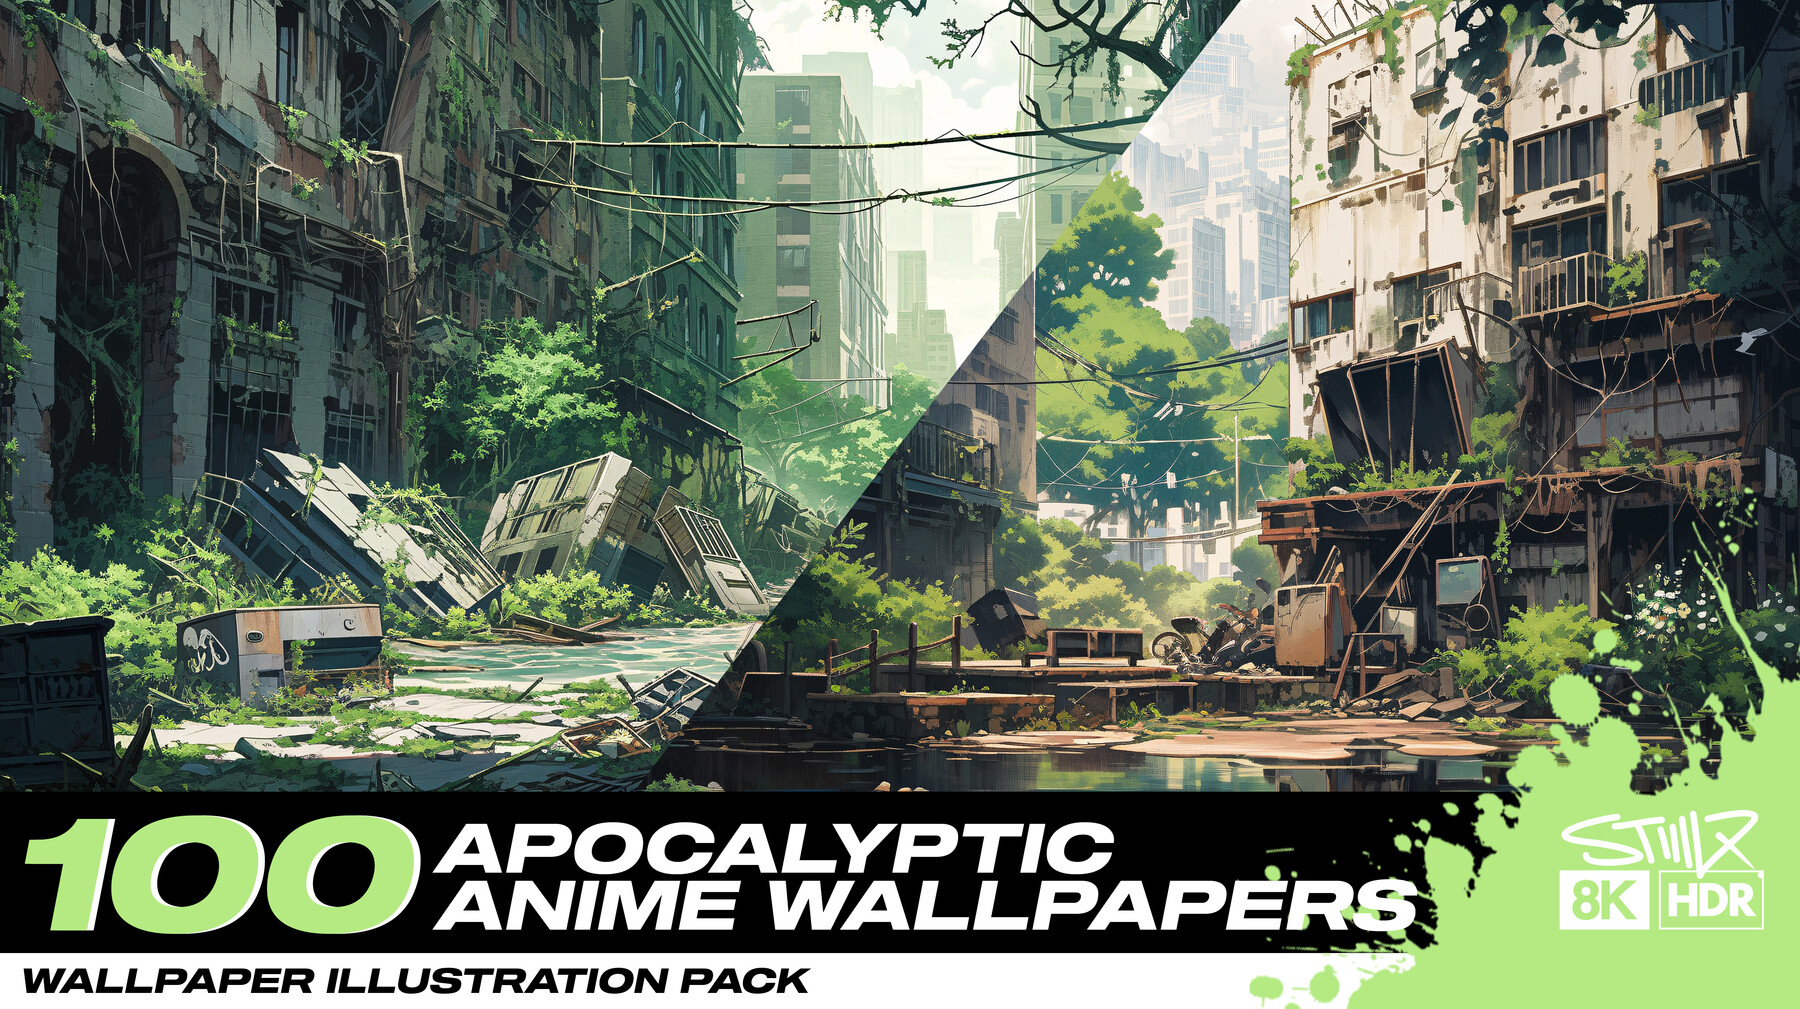 ArtStation - 100 Apocalyptic Anime Wallpaper Illustration Pack Vol.1, 8K  Reference Images